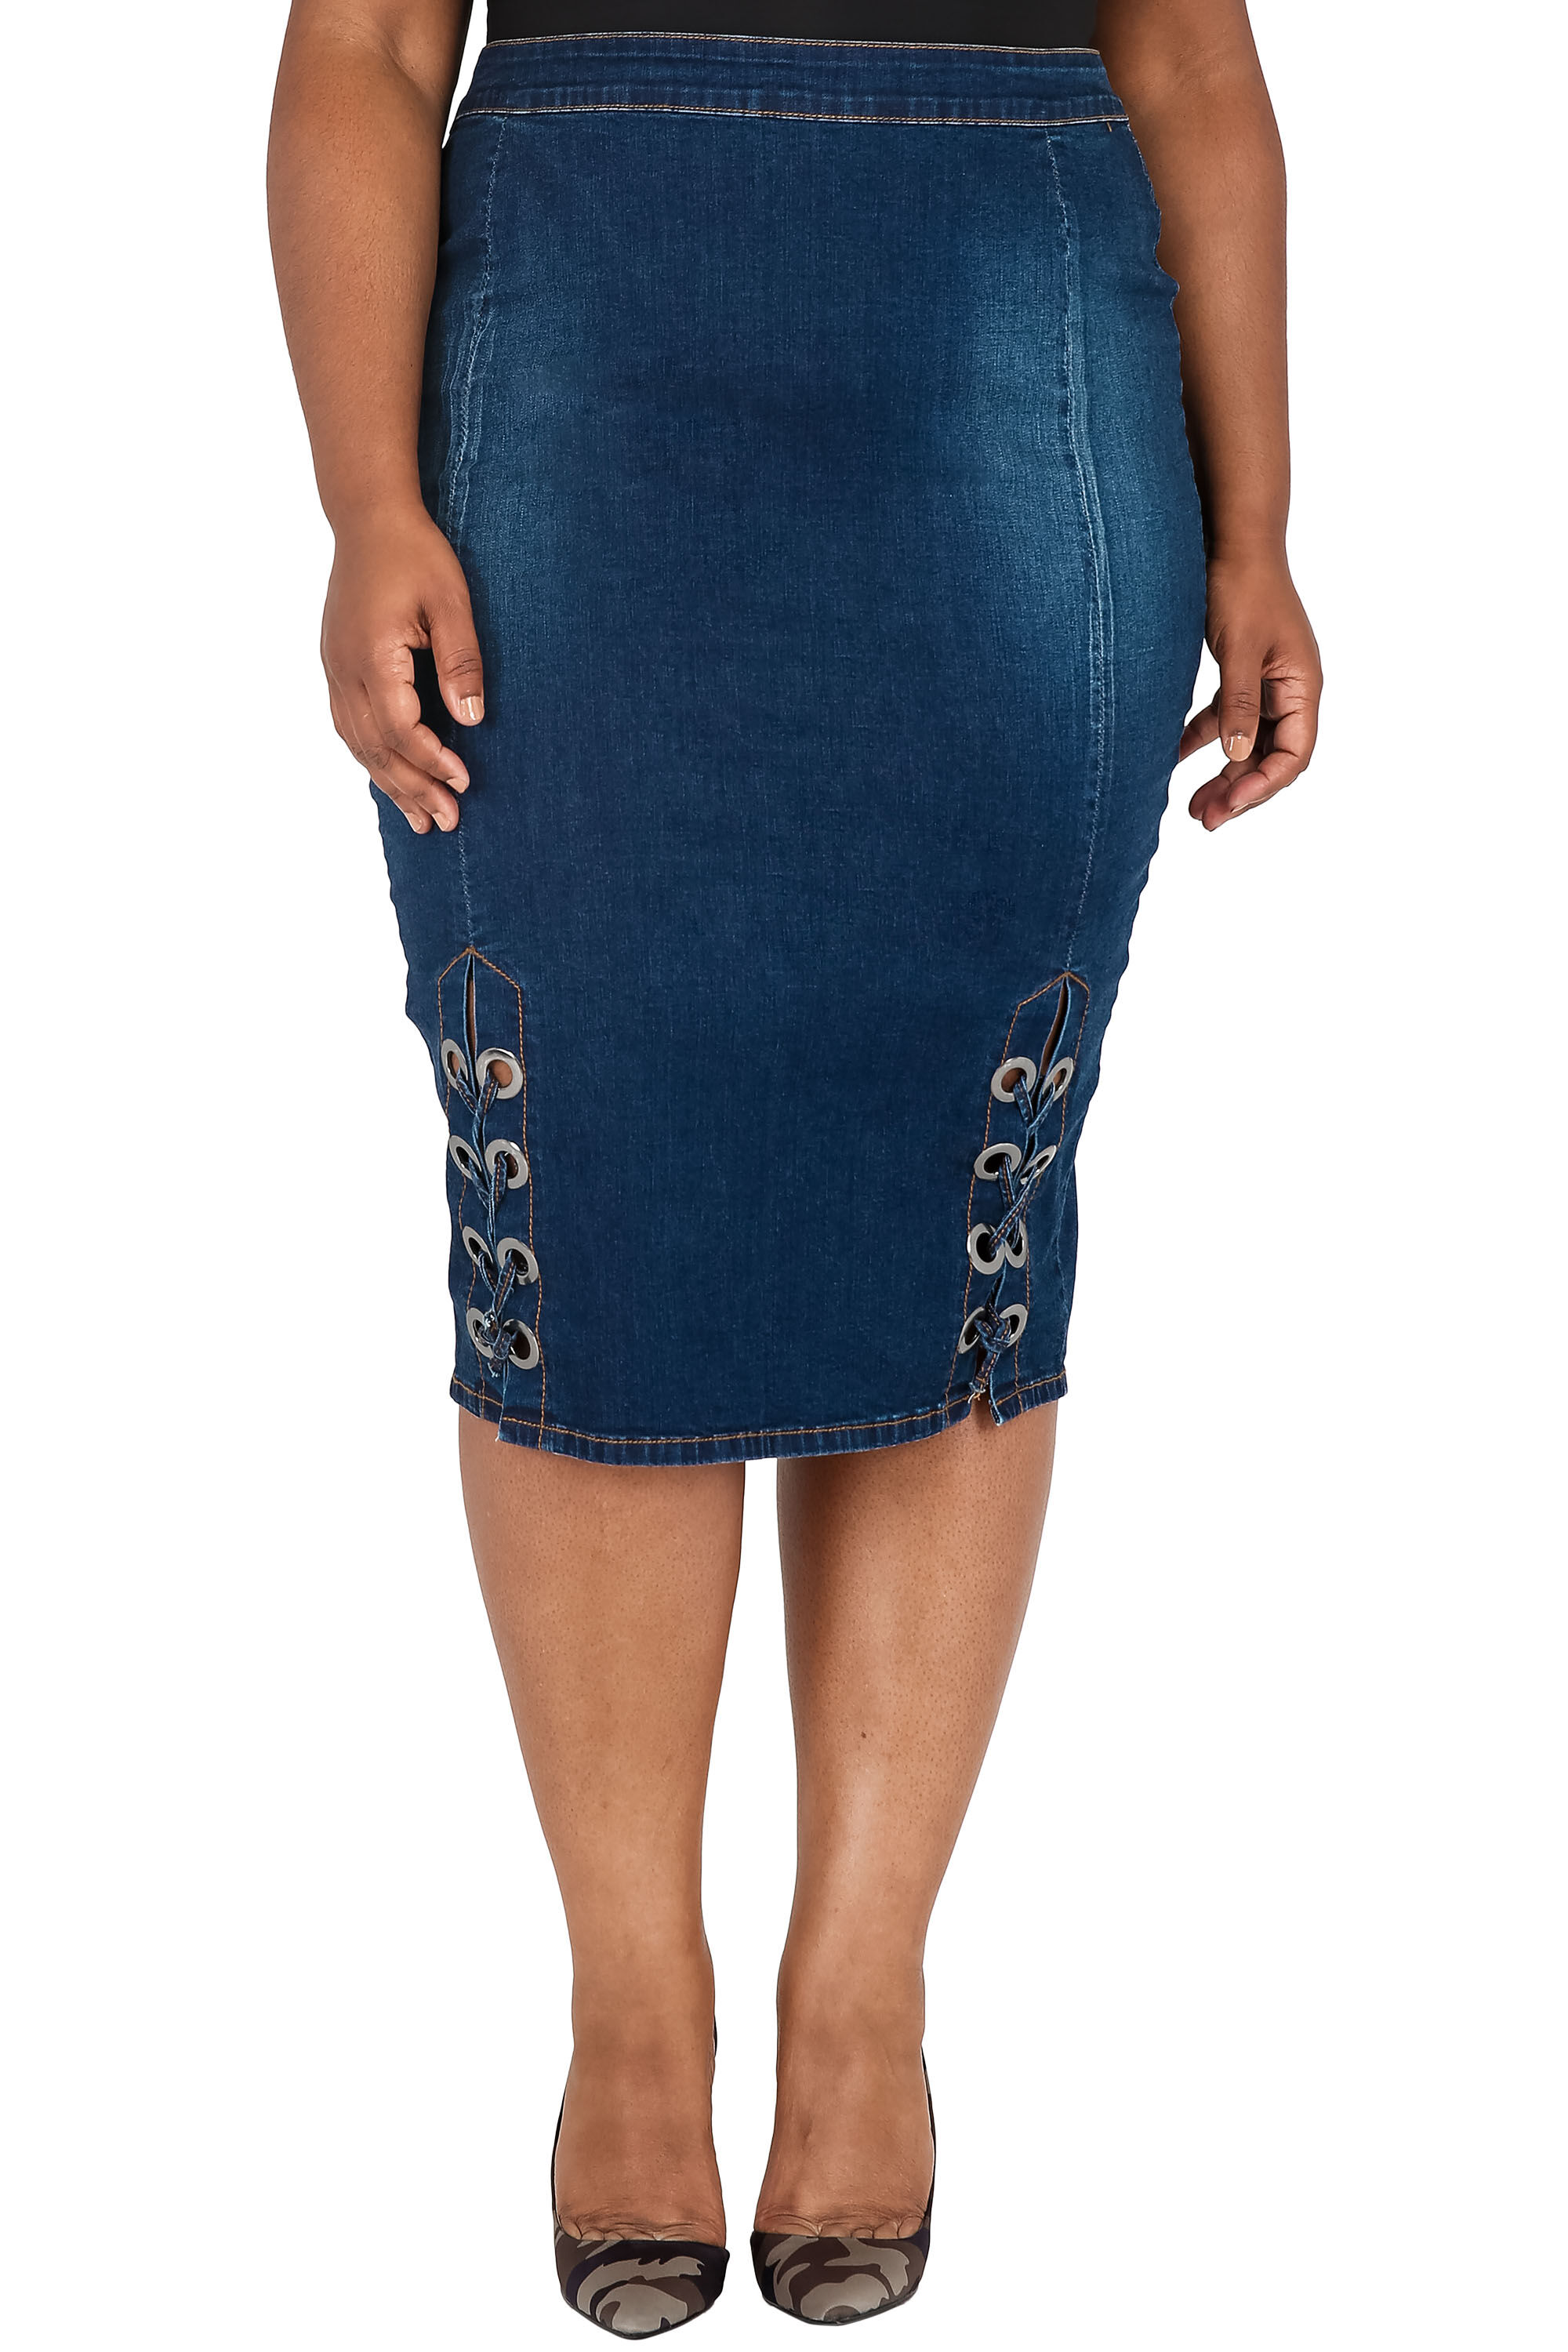 LIH HUA Women's Plus Size Denim Skirt Chic Elegant Skirt For Chubby Women  Autumn Cotton Knitted Skirt - AliExpress